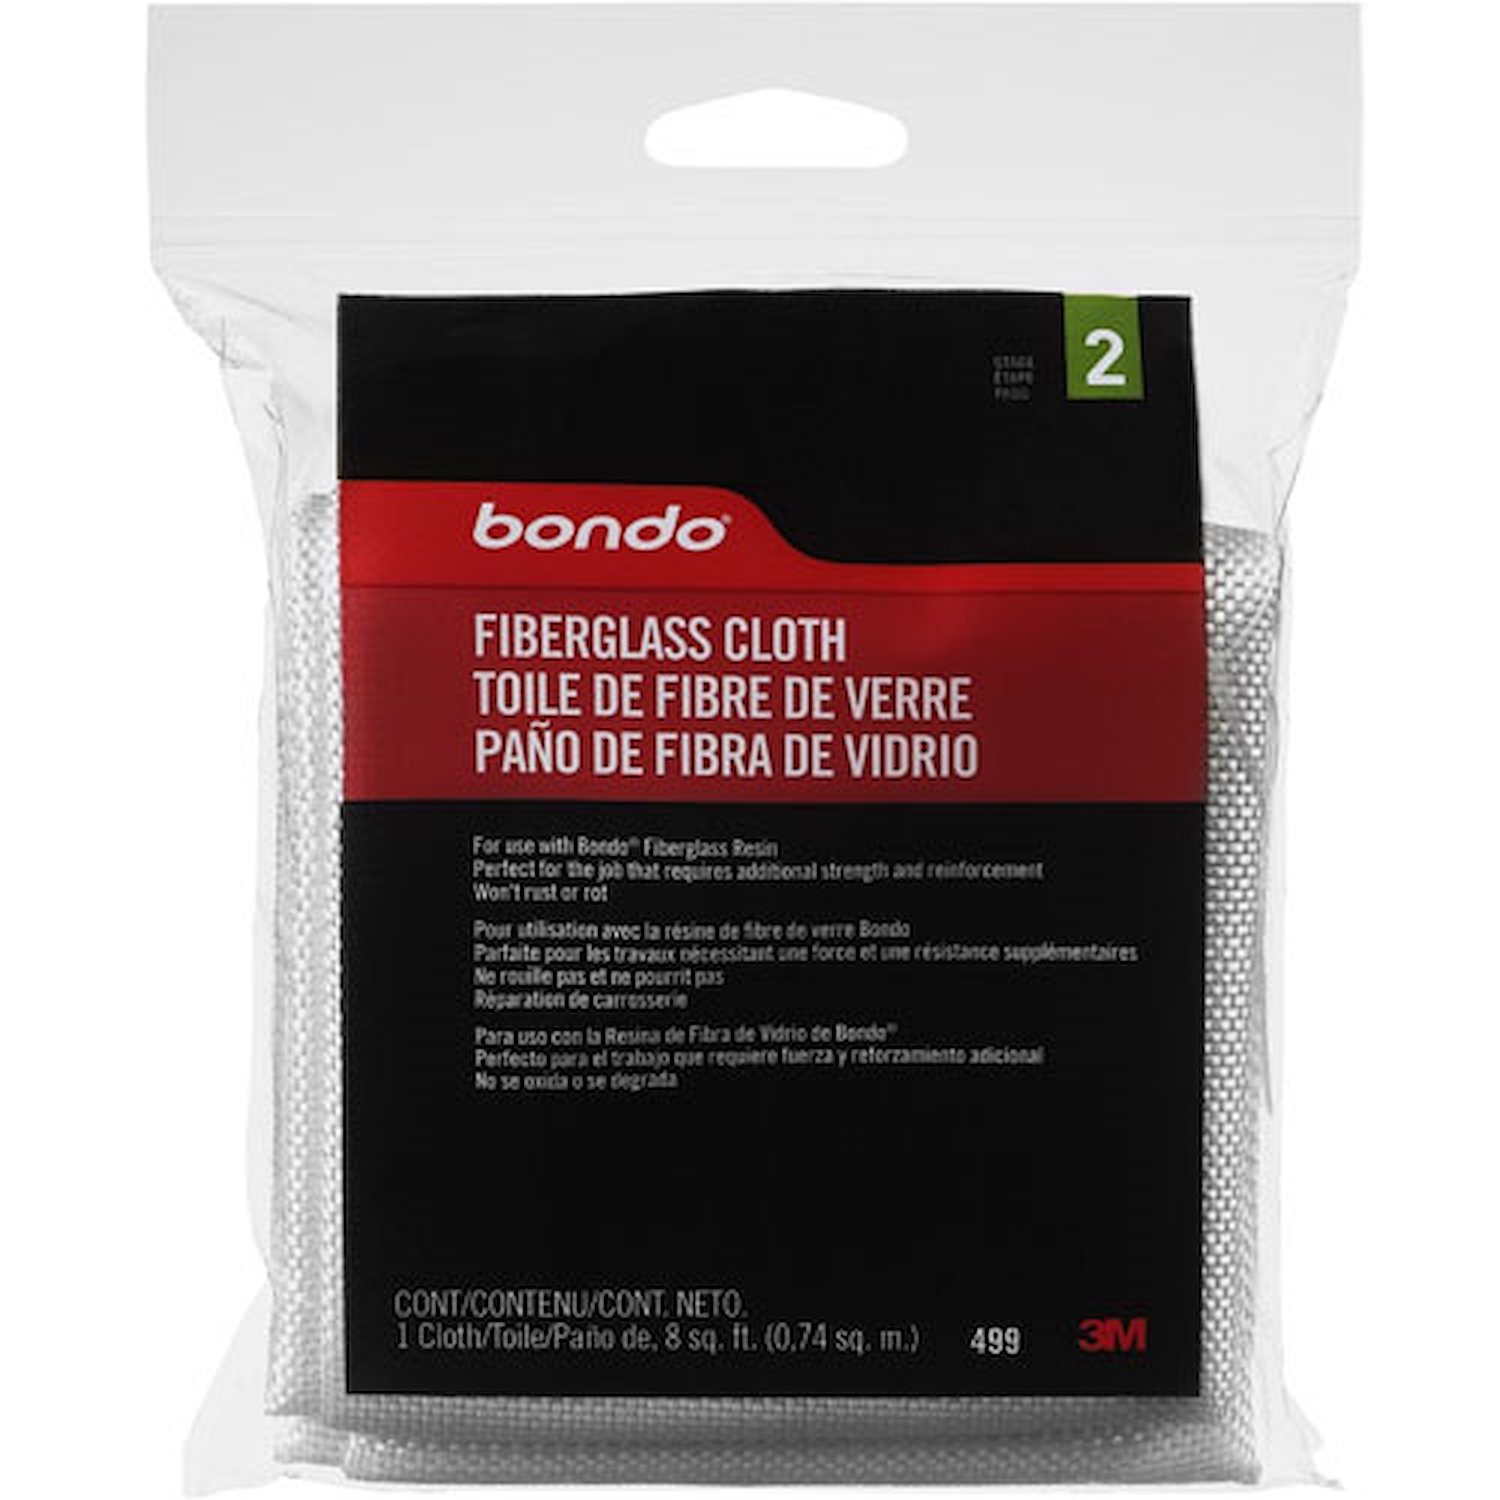 Bondo Fiberglass Cloth Use With Bondo Polyester Fiberglass Resin